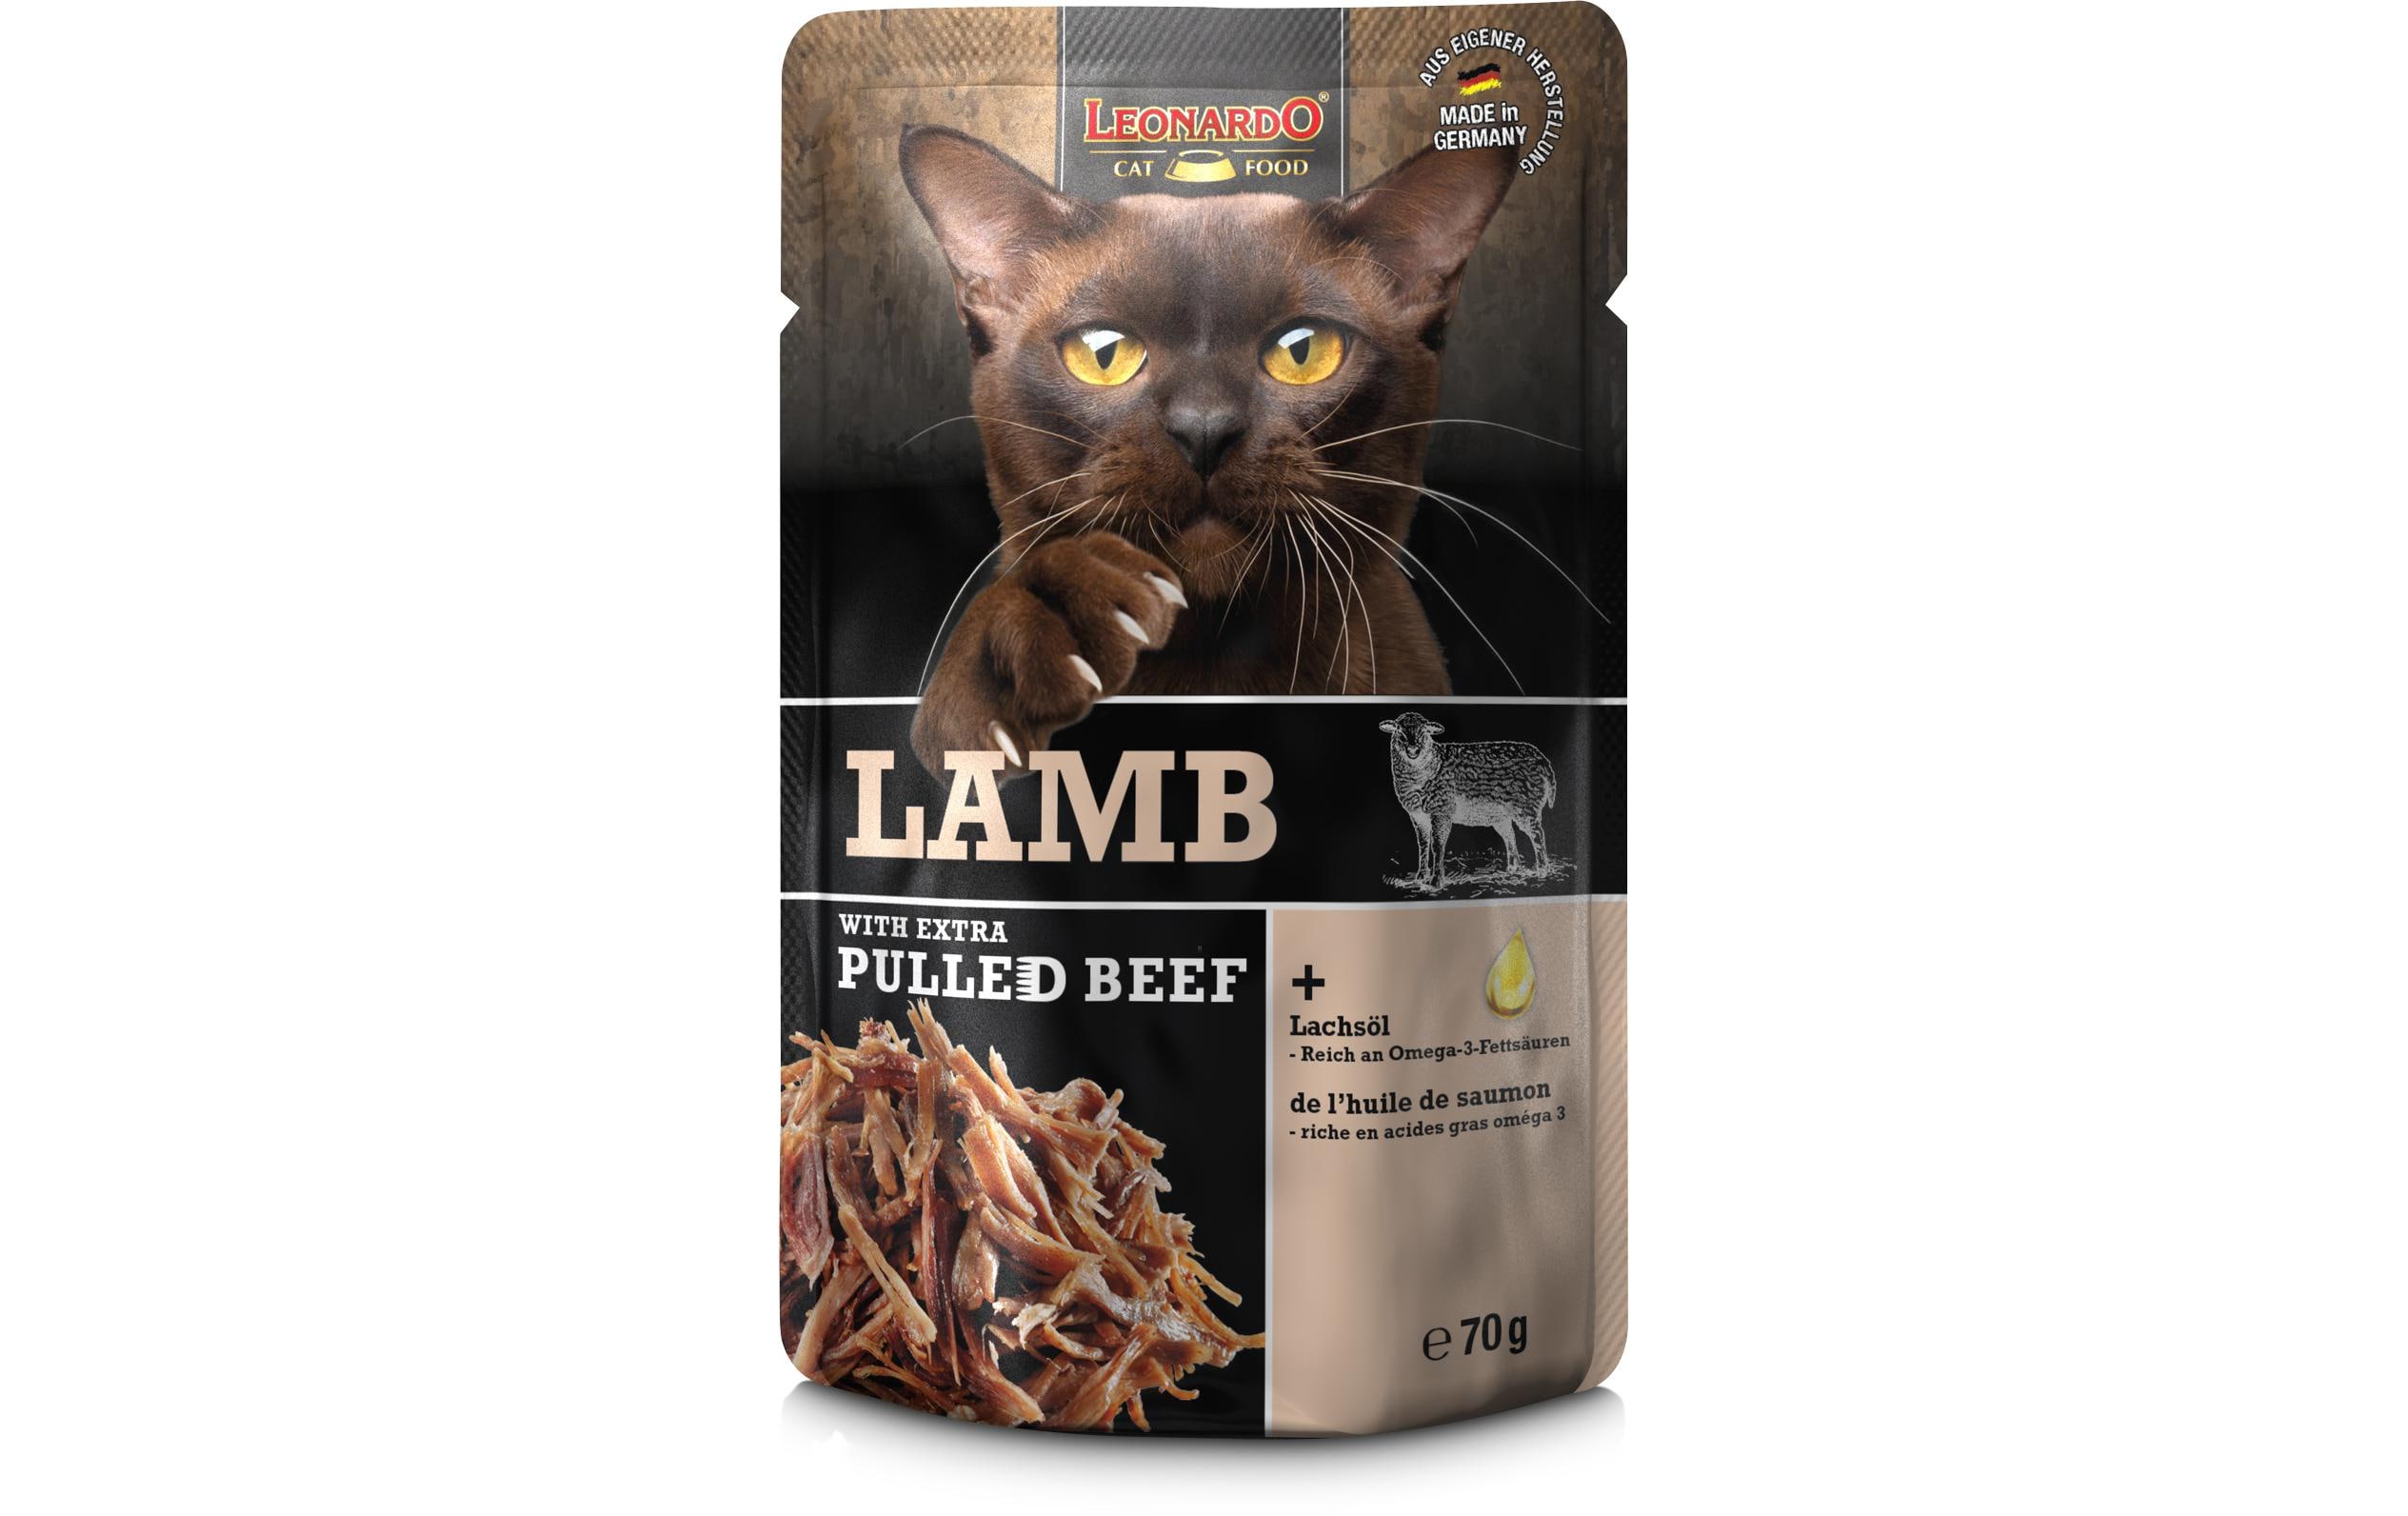 Leonardo Cat Food Nassfutter Kalb & Pulled Beef, 16 x 70 g